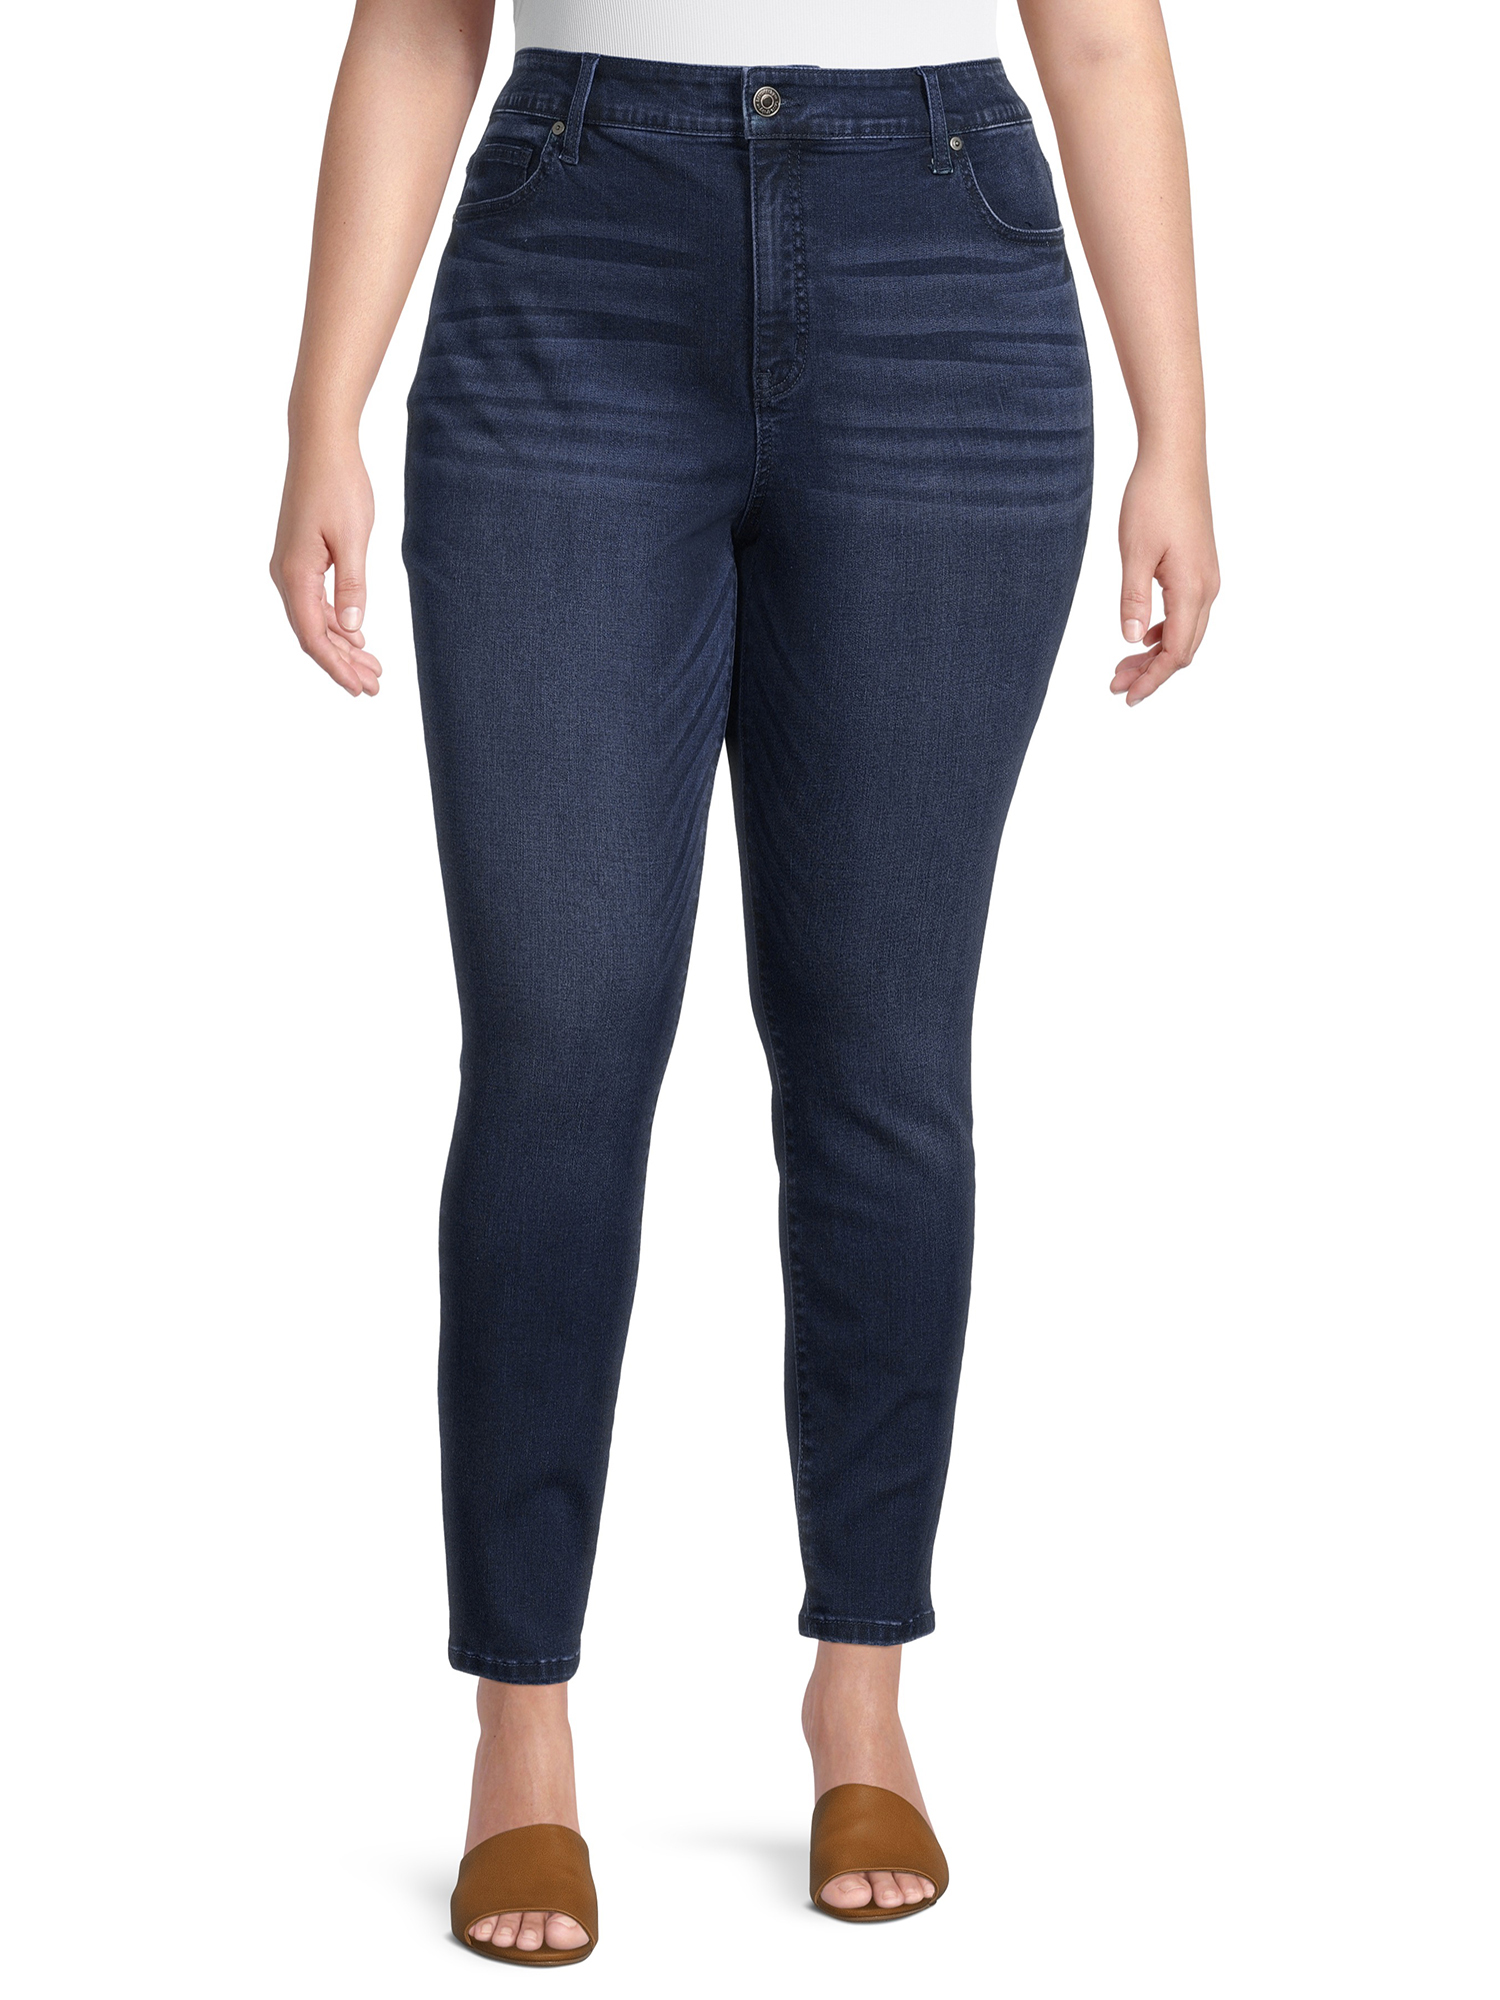 Terra & Sky Women's Plus Size Skinny Jeans, 29” Inseam - image 1 of 11